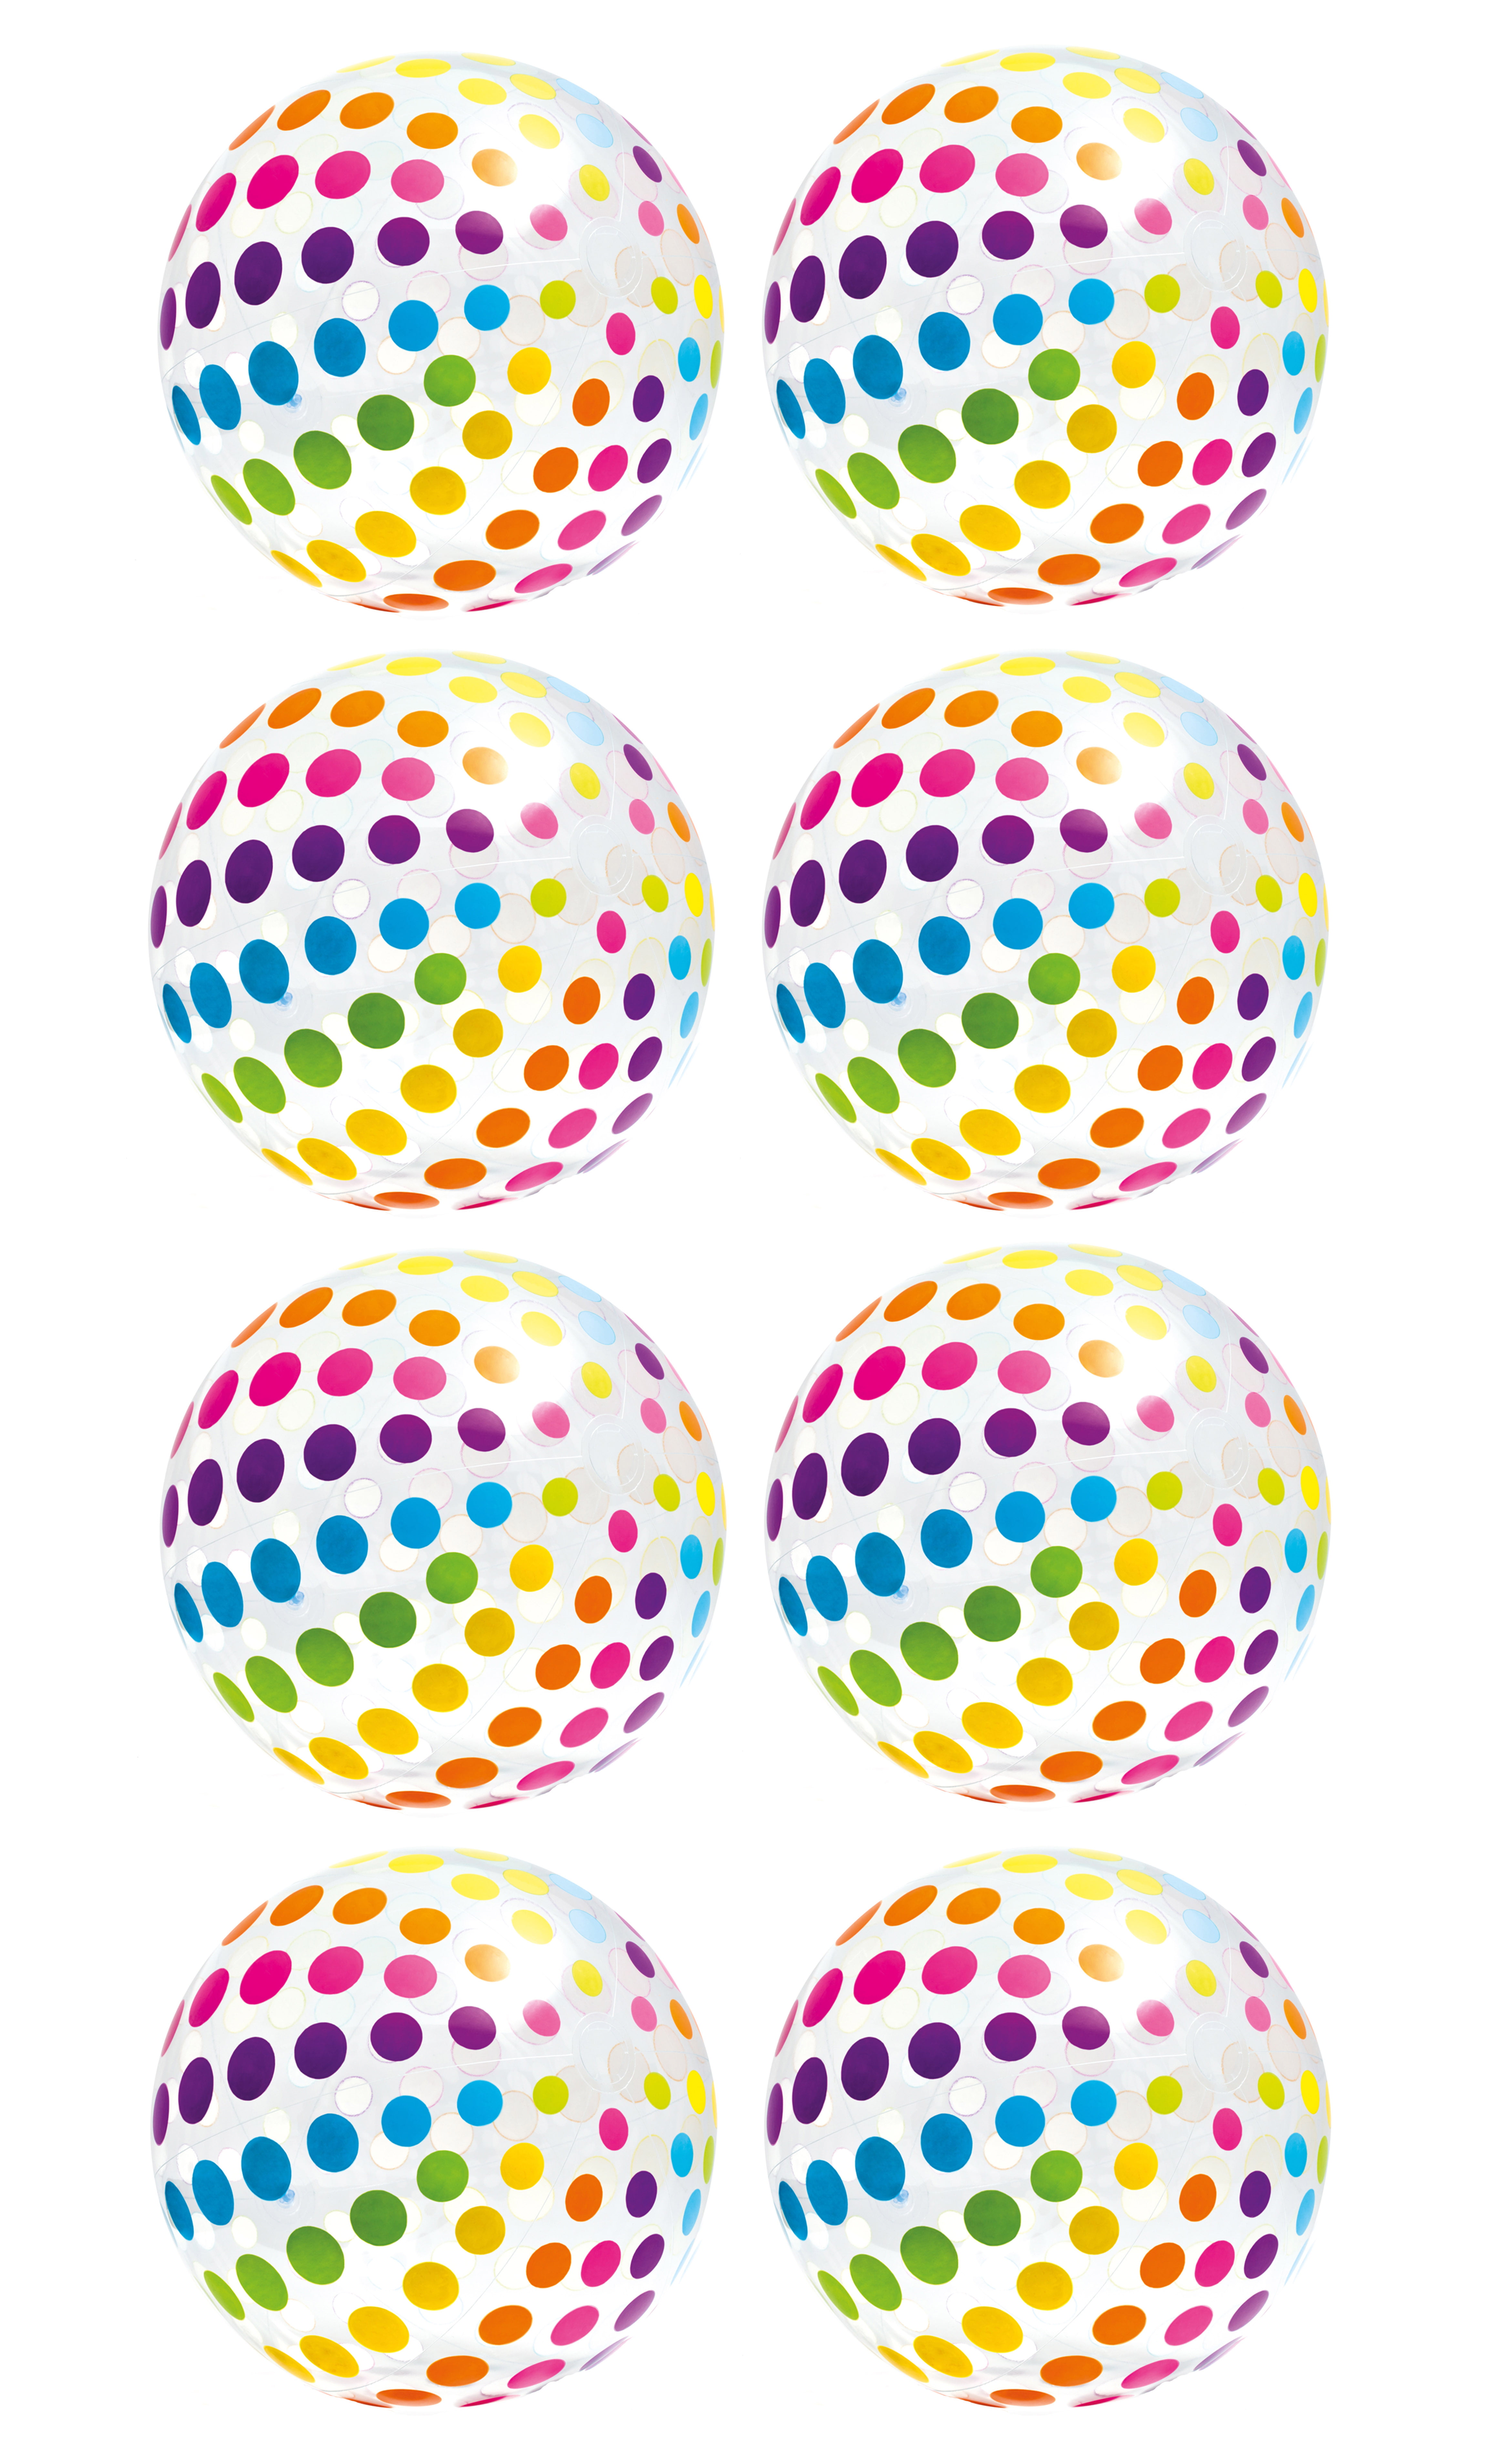 Intex Jumbo Inflatable Big Panel Colorful Polka Dot Giant Beach Balls Set of 8 